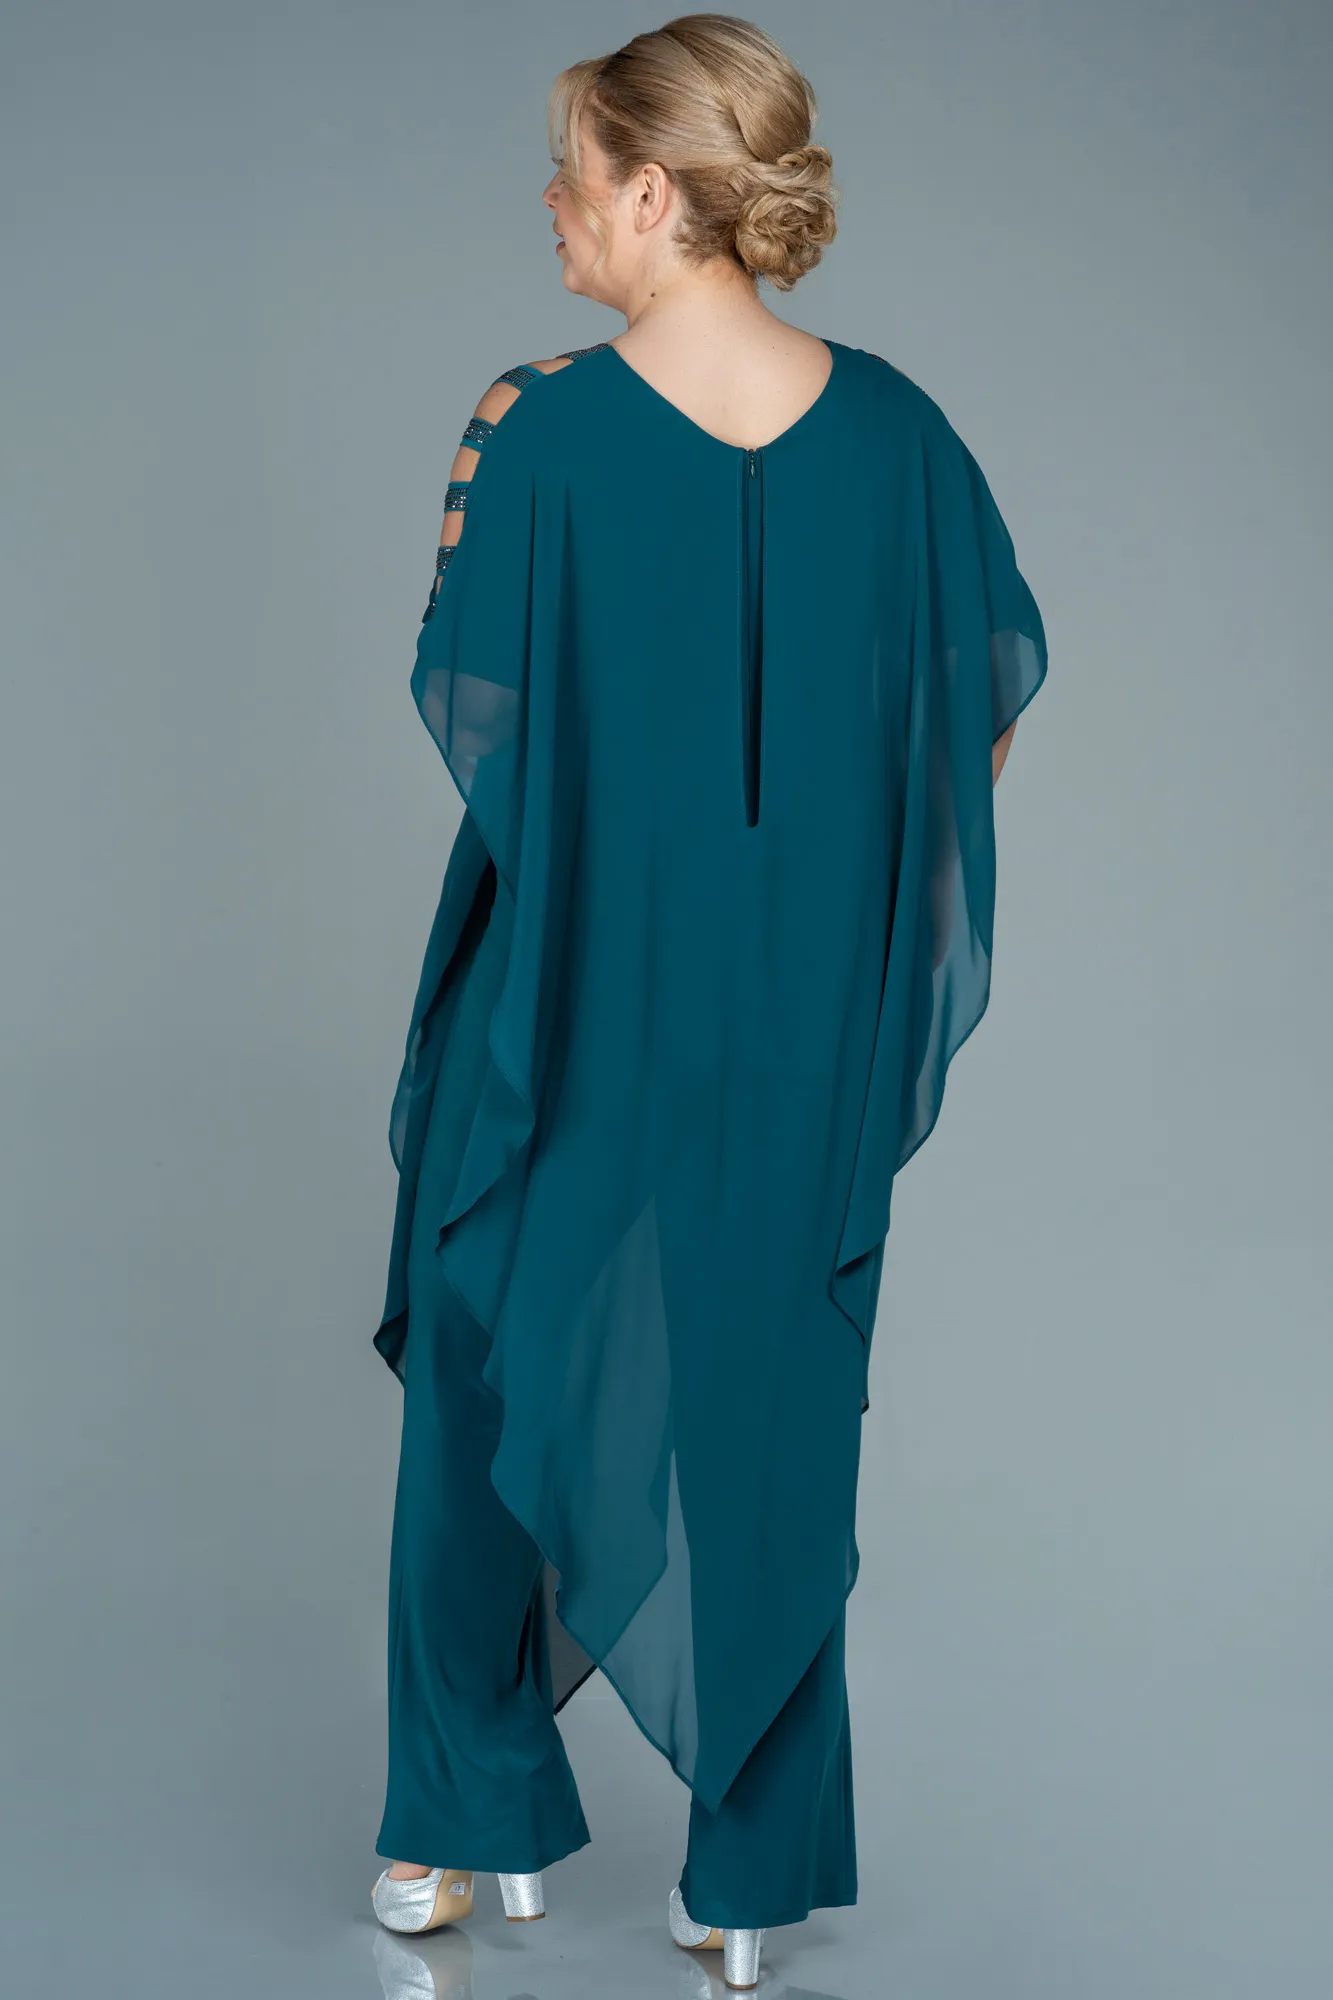 Green-Chiffon Plus Size Evening Dress ABT080